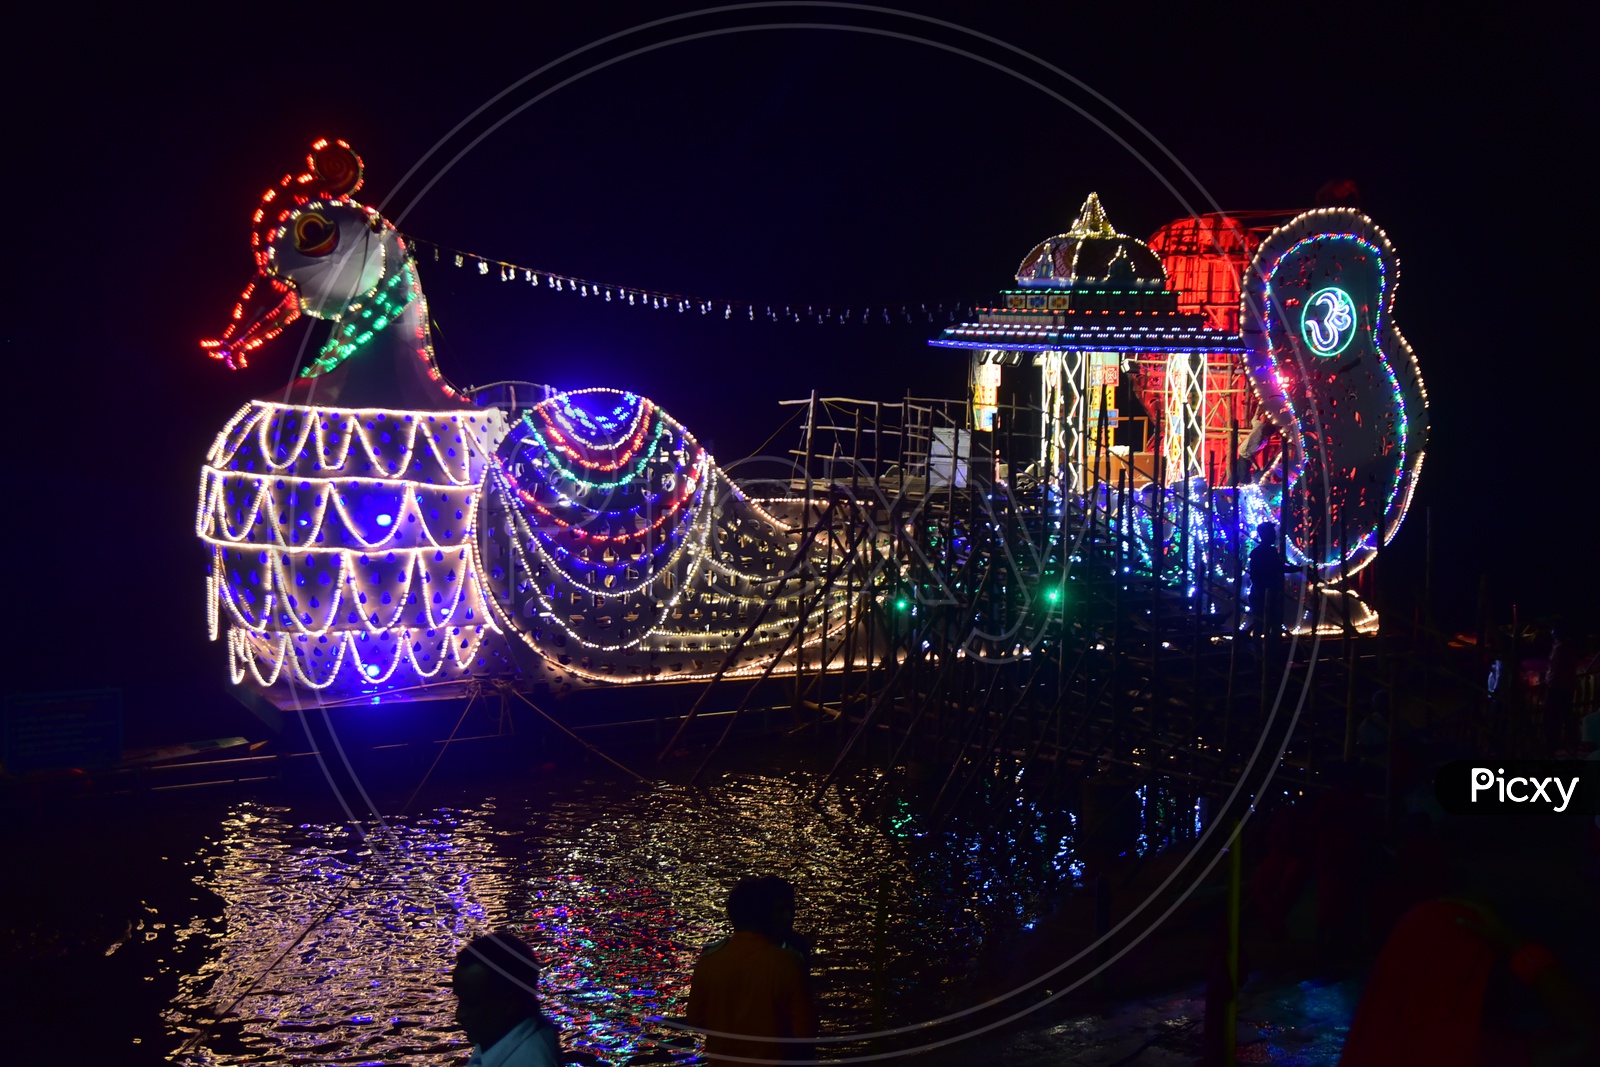 Decorated Boat In Krishna River